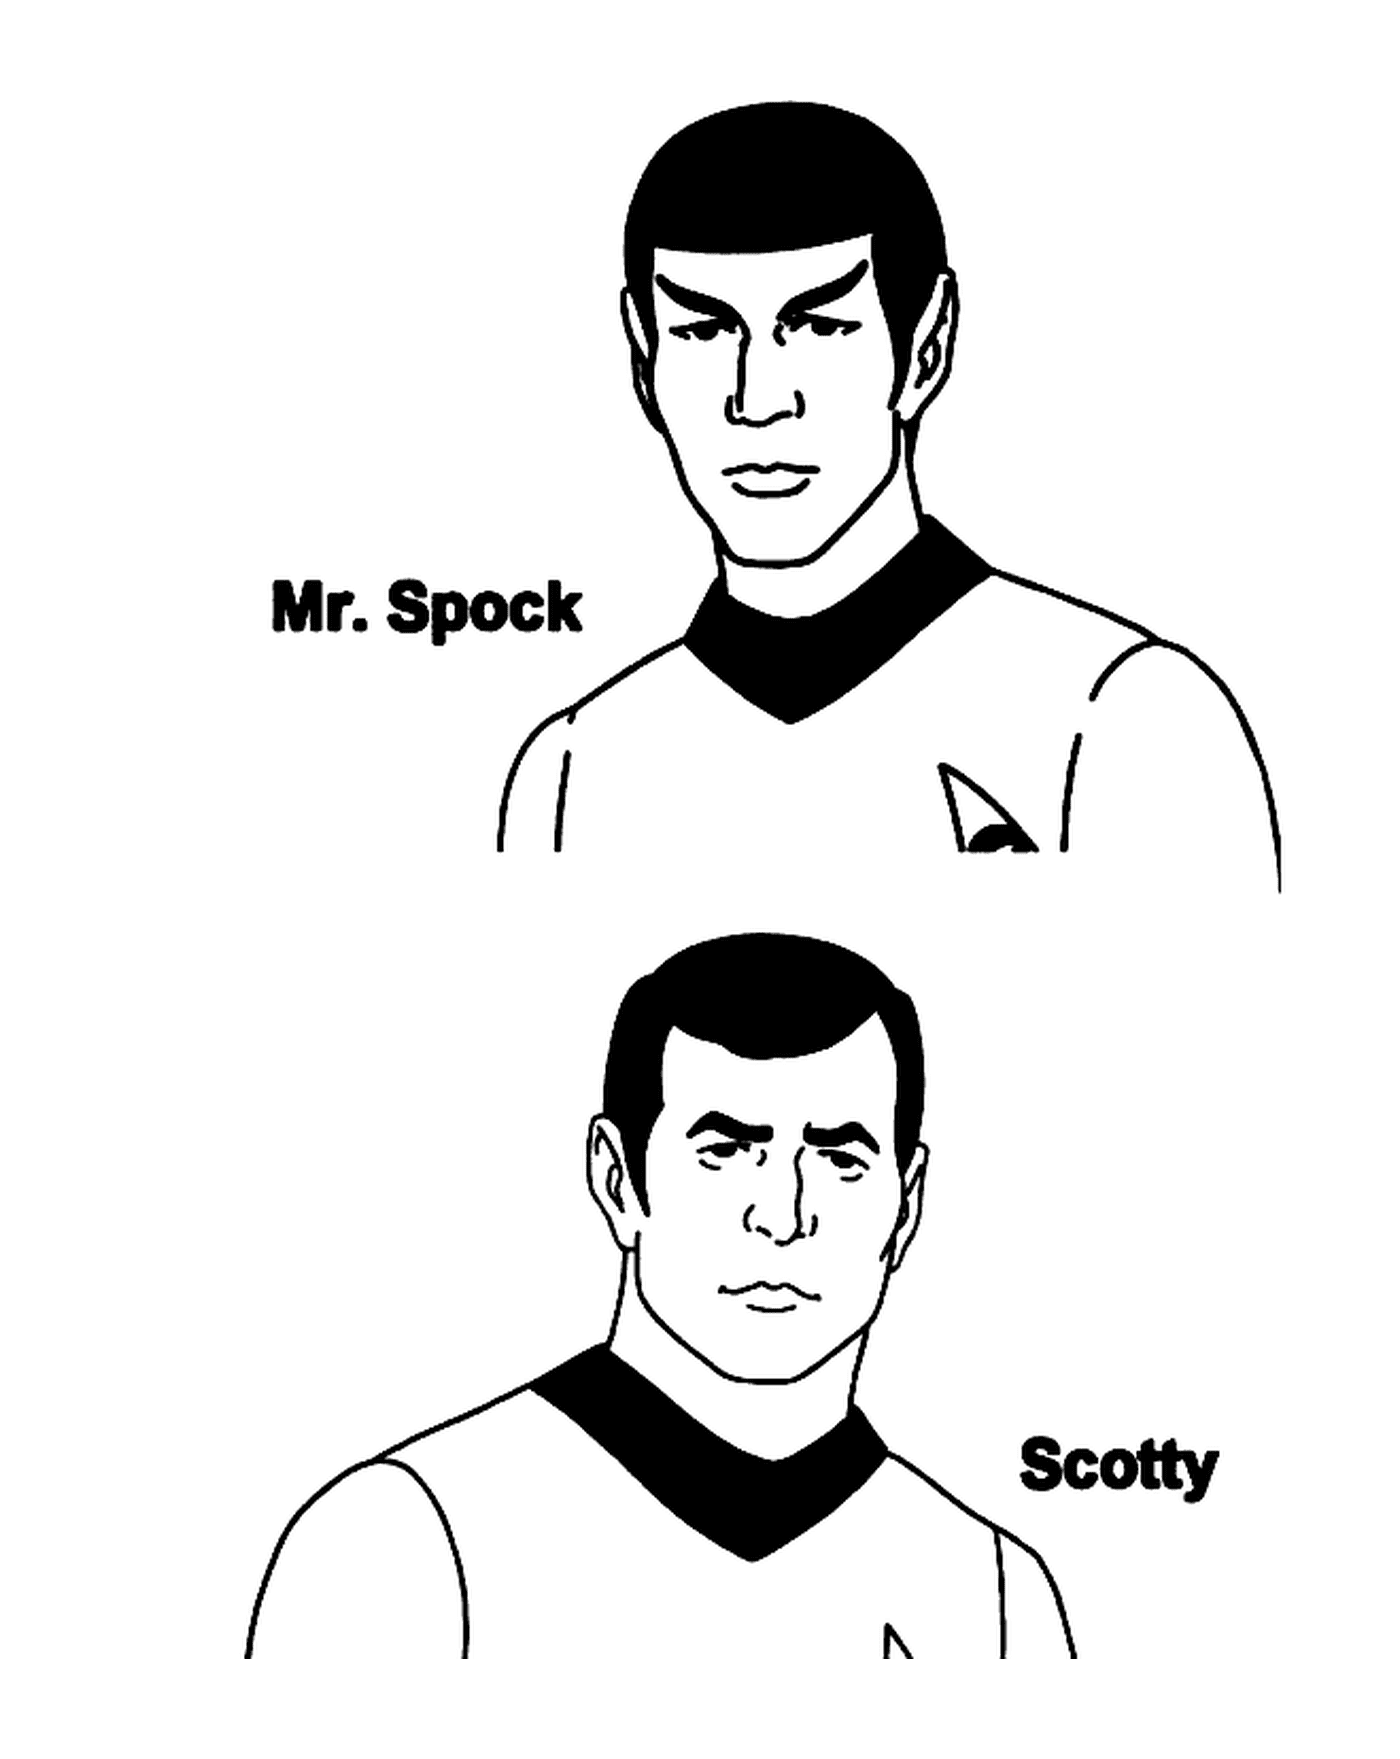  Mr Spock and Scotty de Star Trek 